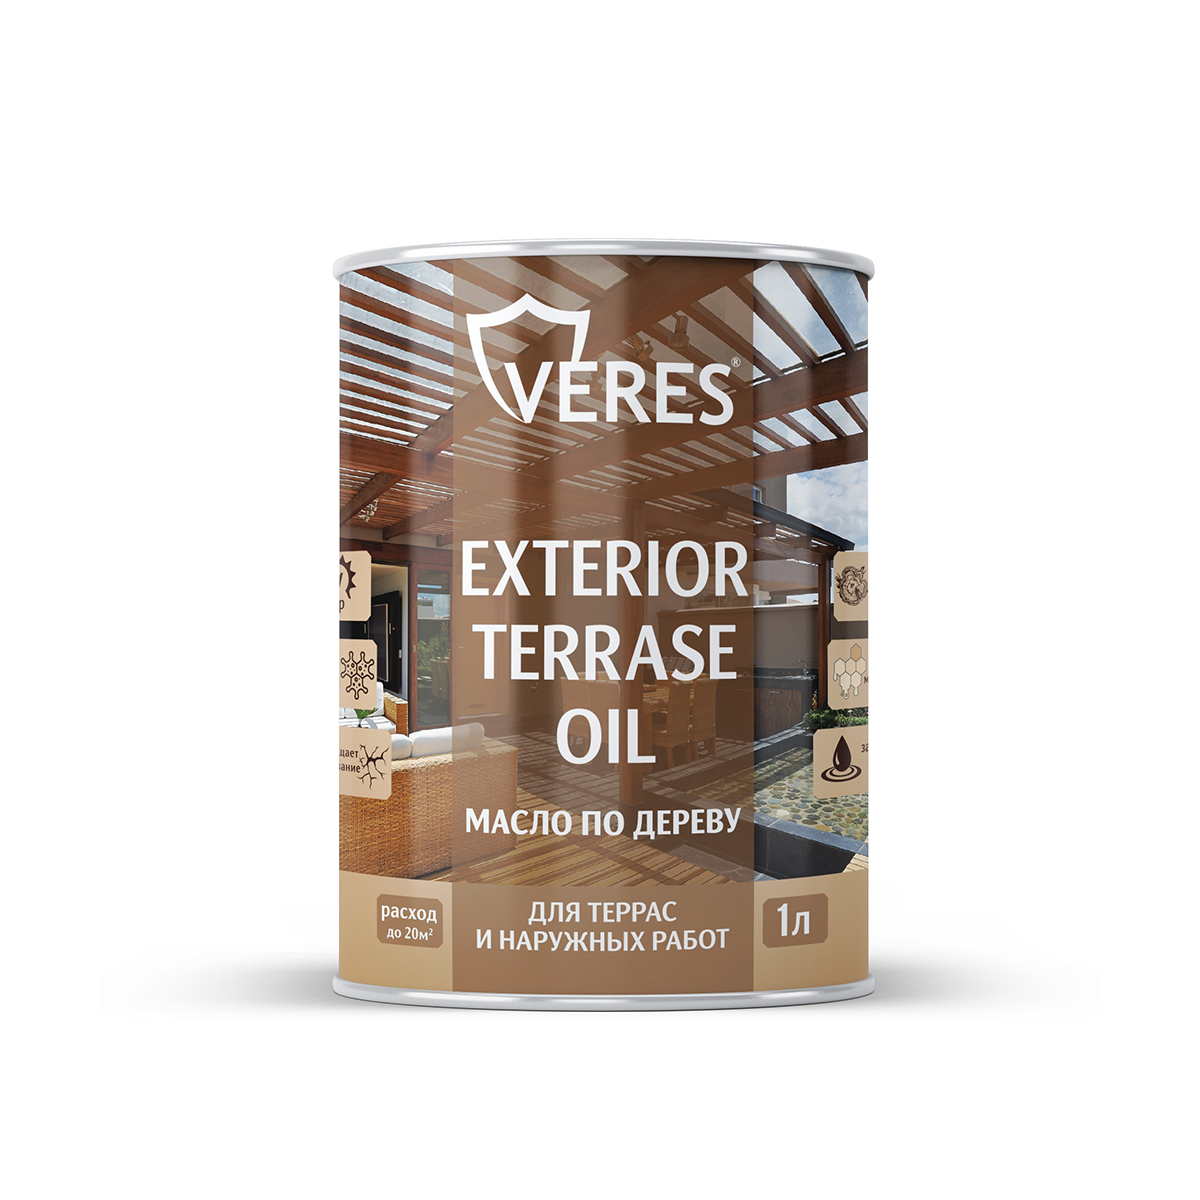 Масло для дерева Veres Exterior Terrase Oil, 1 л, бесцветное масло для дерева